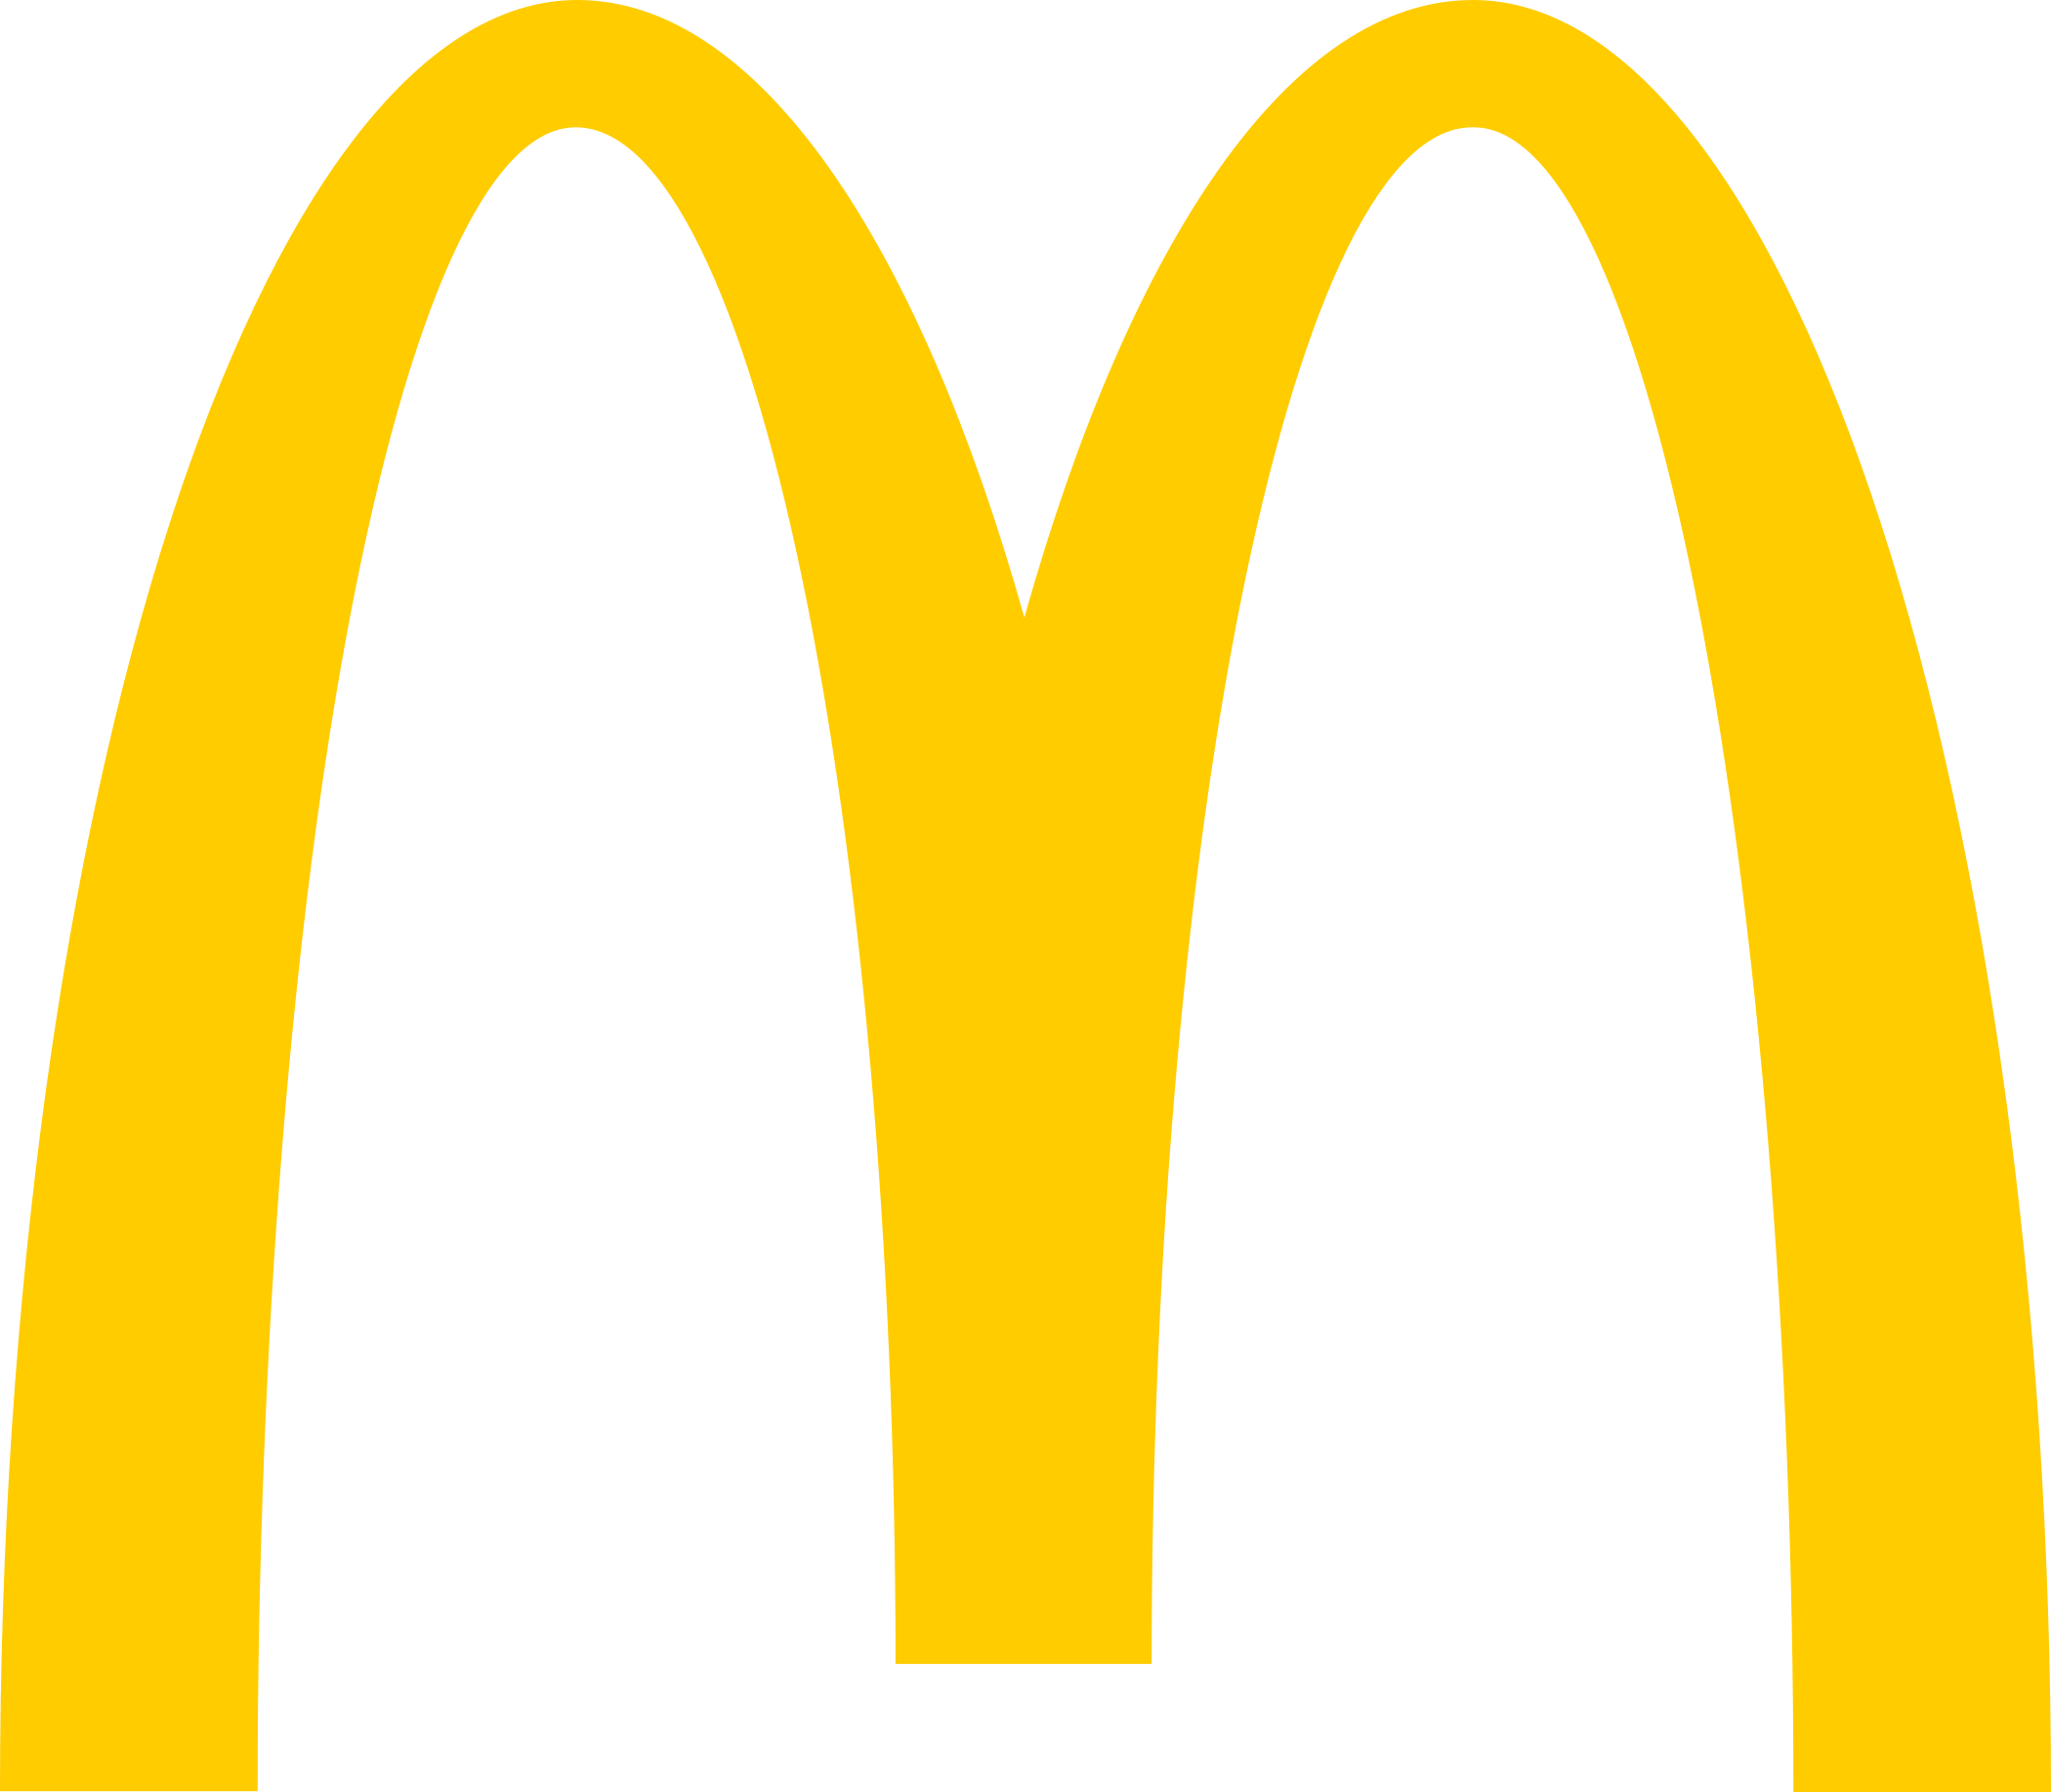 McDonalds-logo-2.png